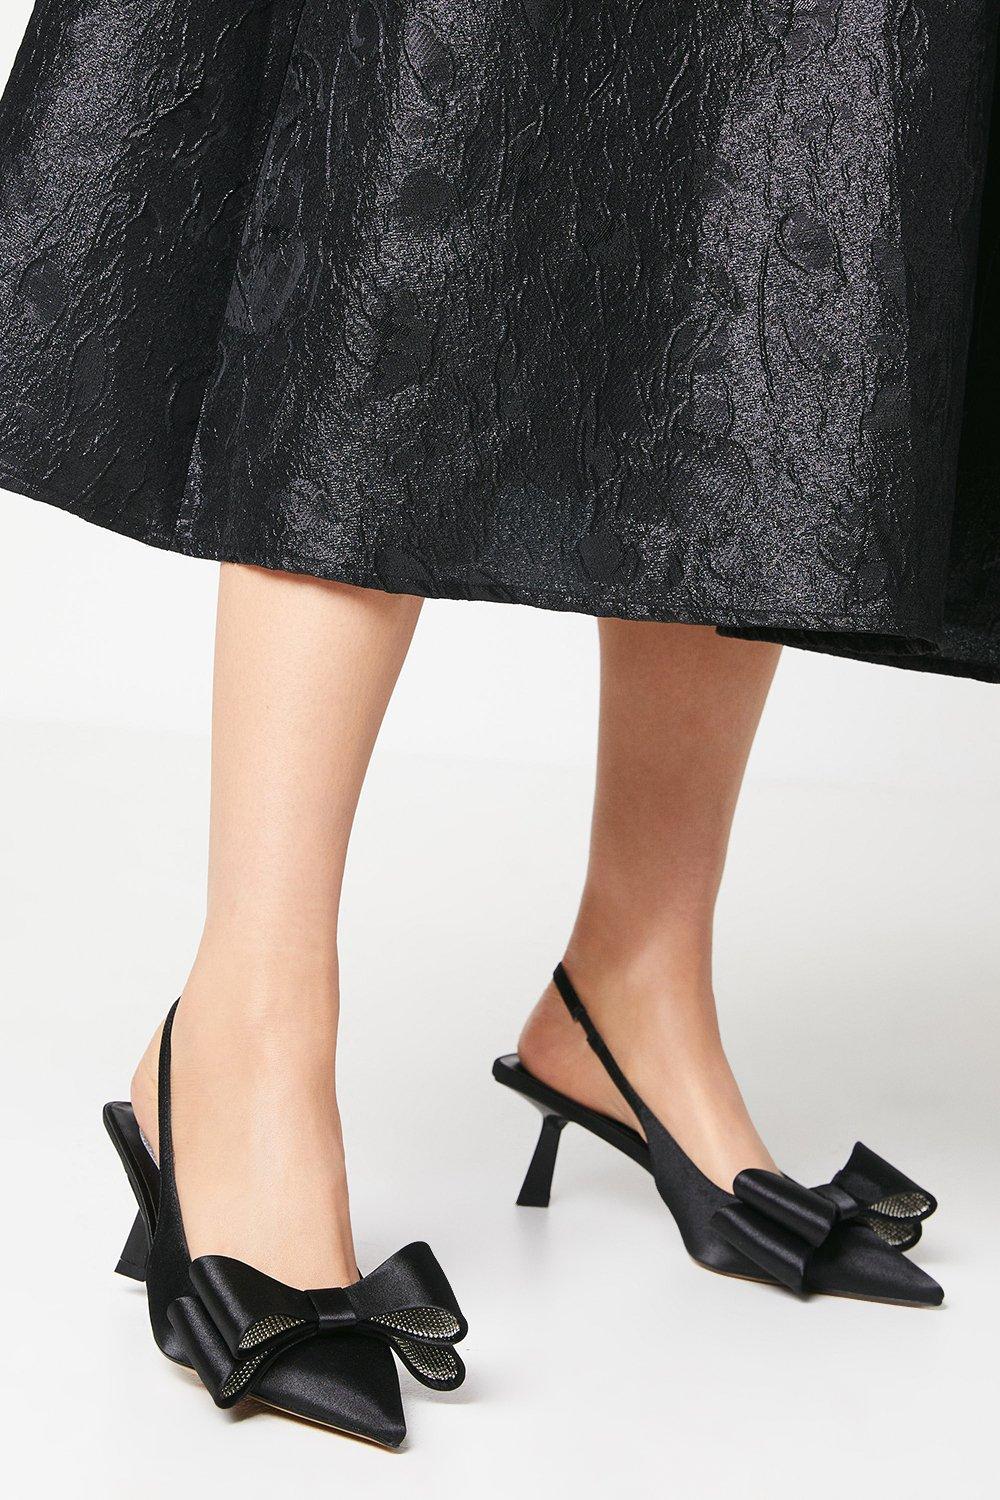 Savannah Satin Bow Detail Kitten Heel Court Shoes - Black